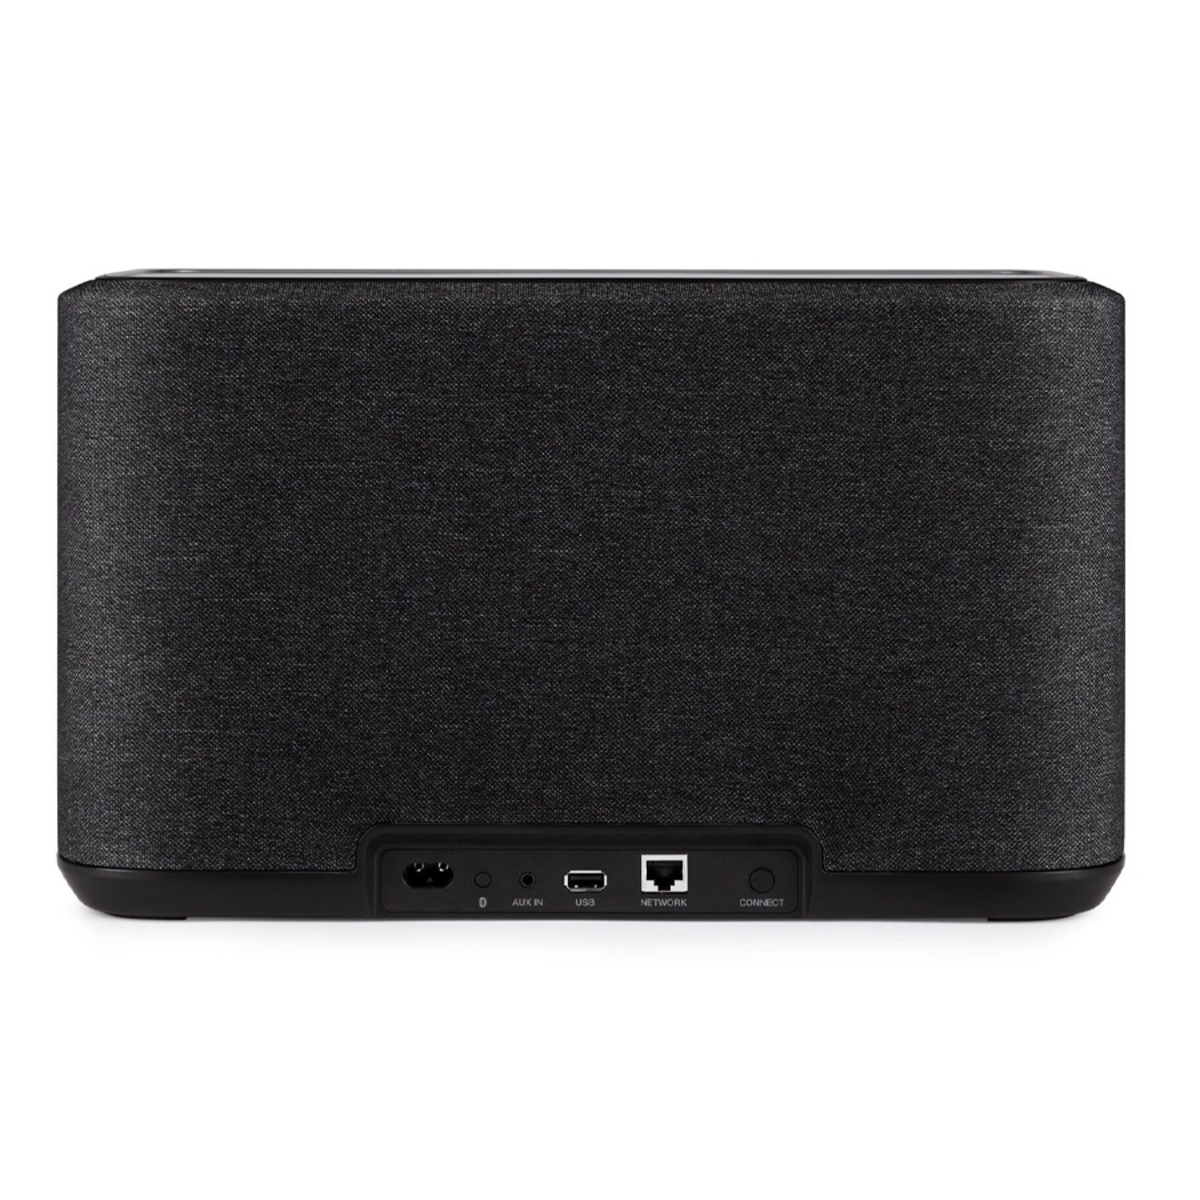 DENON Home 350 Black Large Smart Speaker with HEOS Built-in, Black